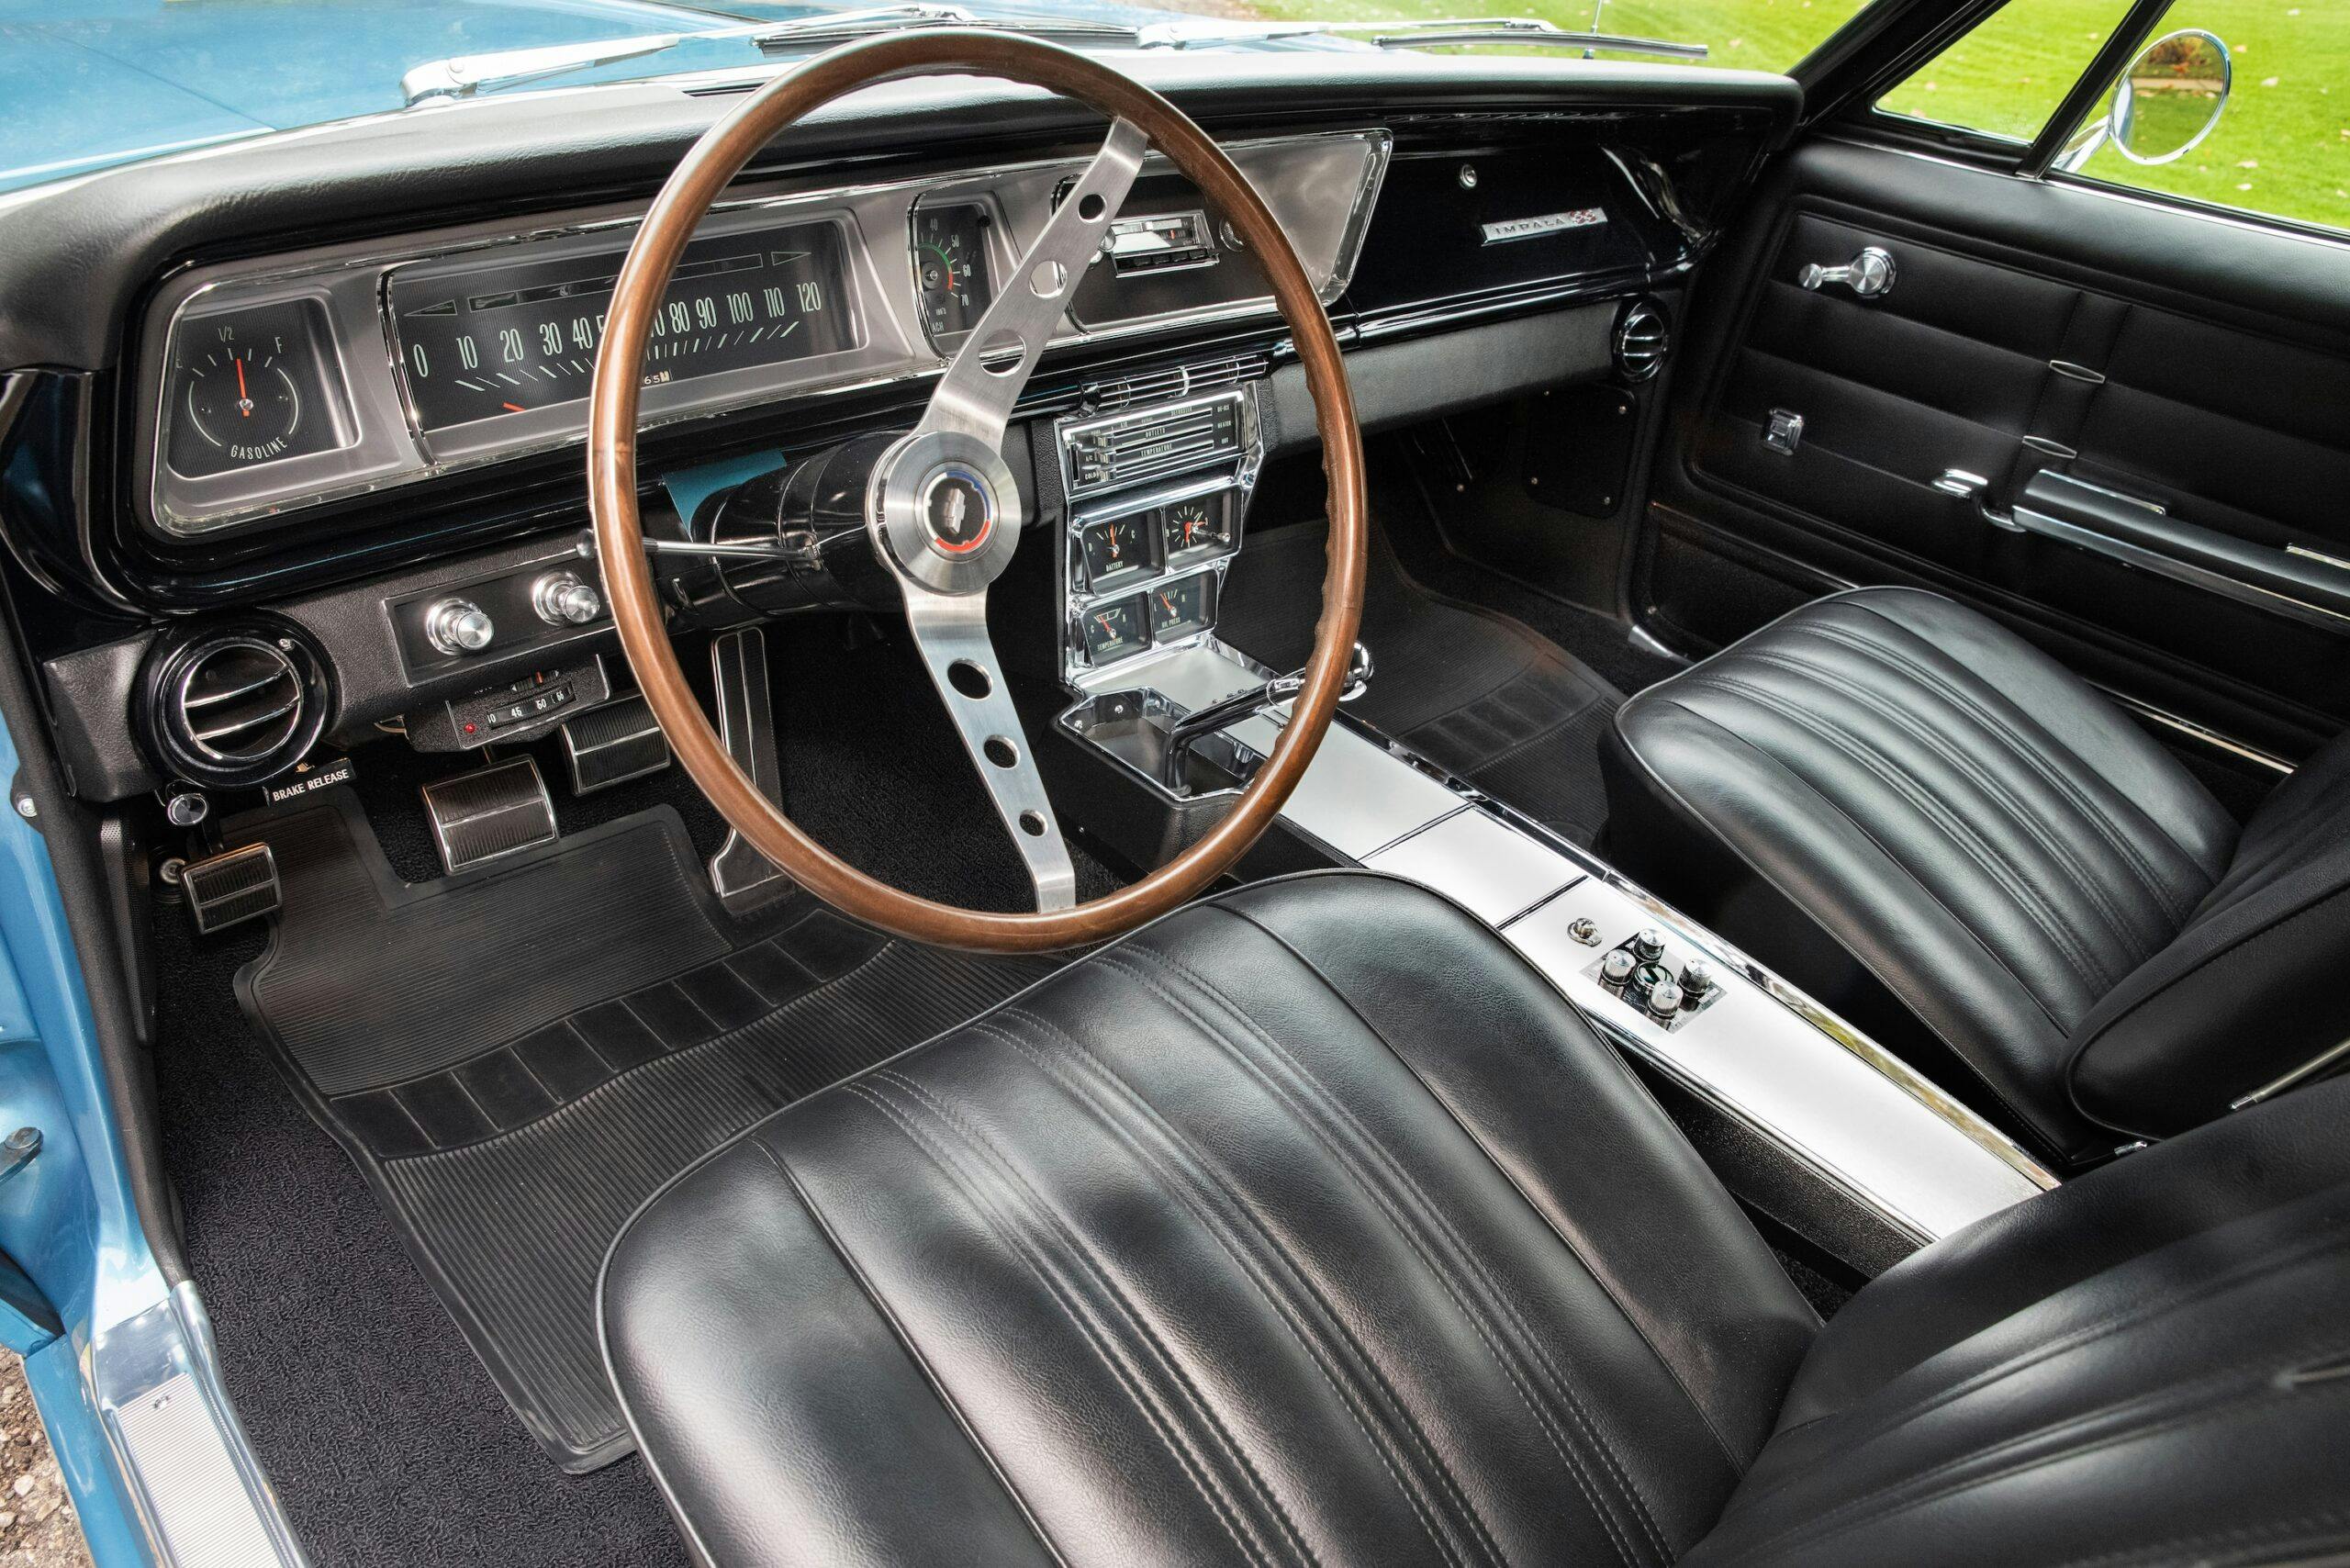 1966 Impala Super Sport convertible interior